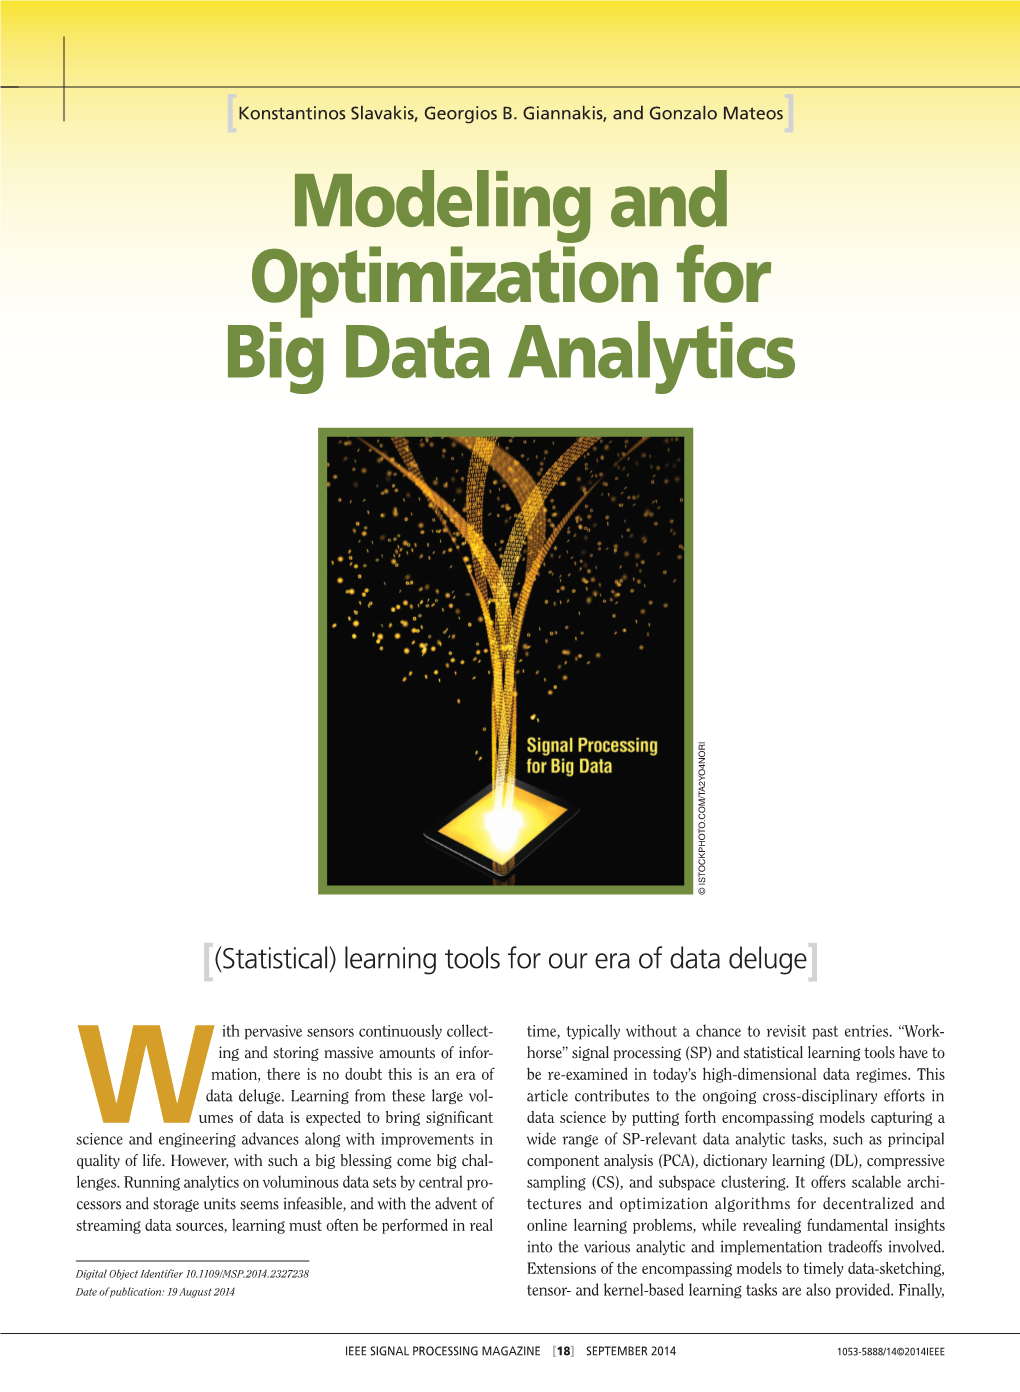 Modeling and Optimization for Big Data Analytics